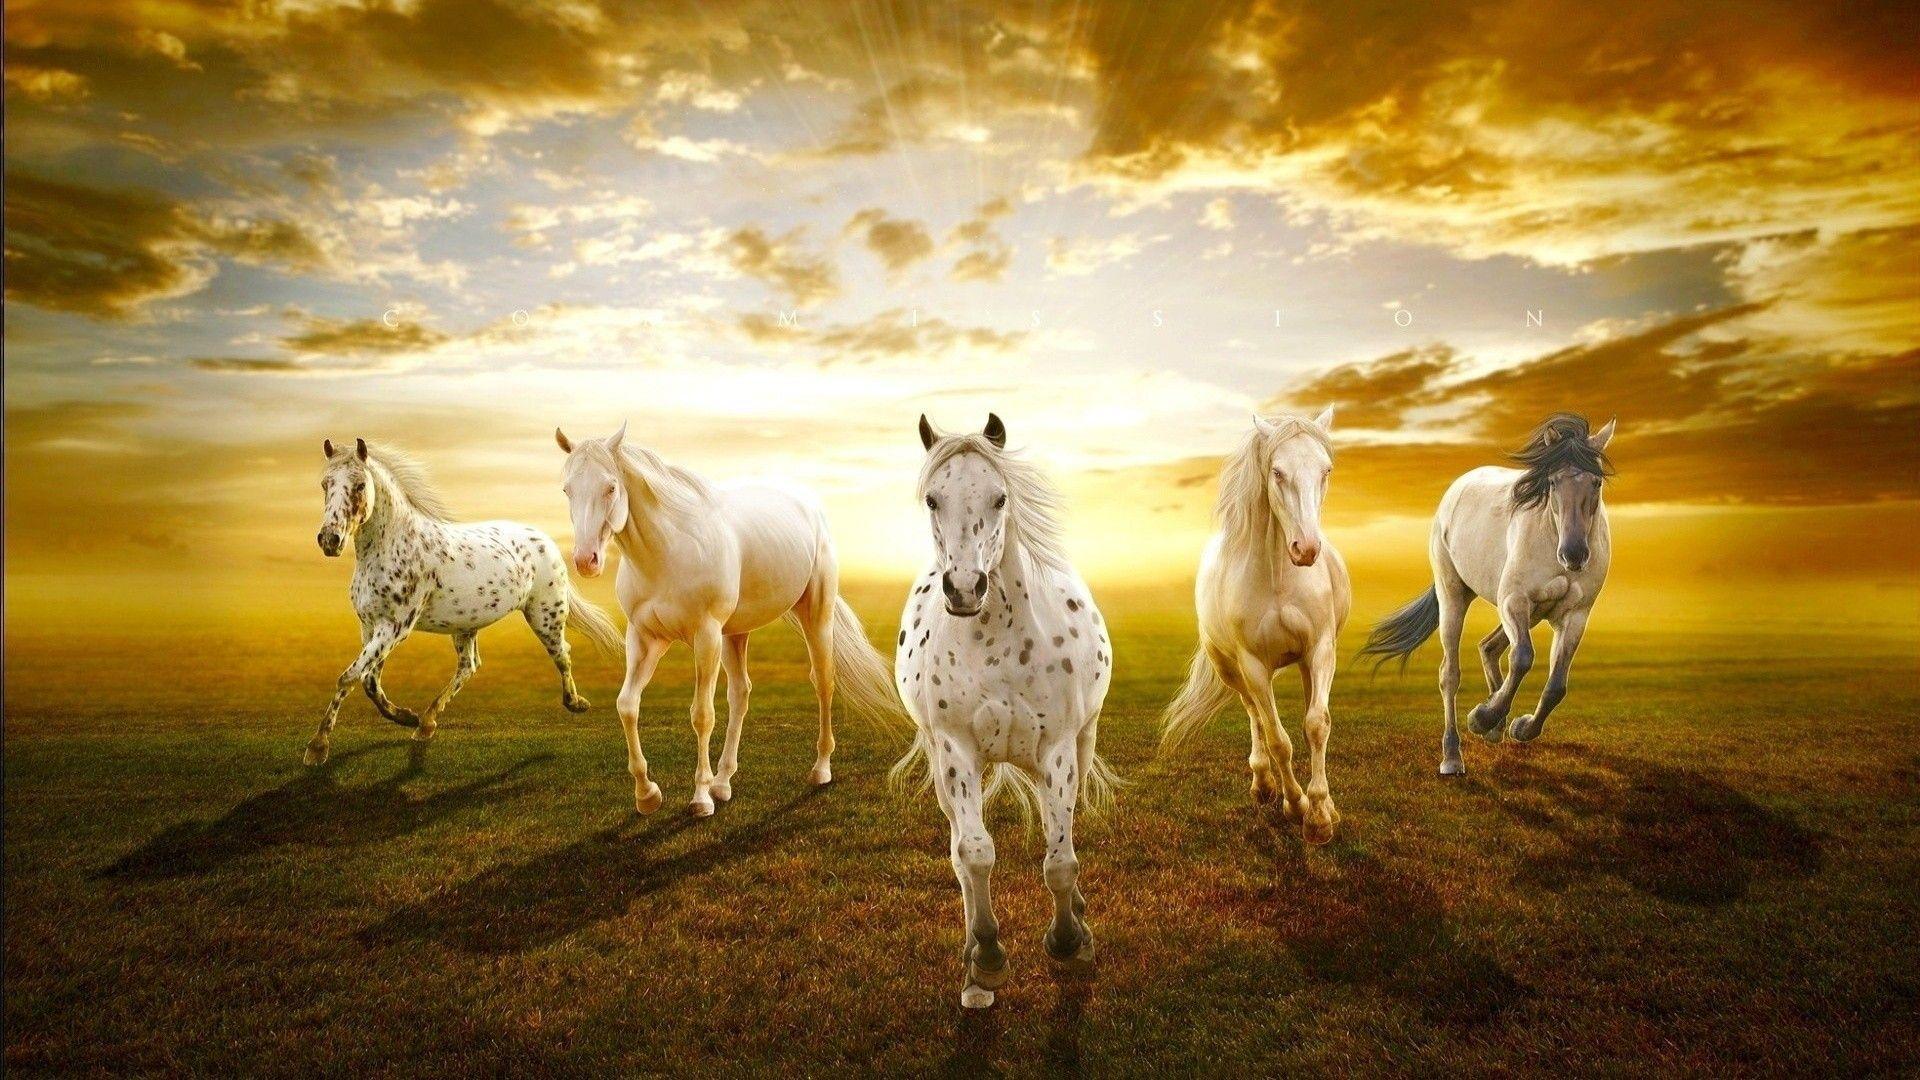 Seven White Horse HD Image Image Konpax 2017